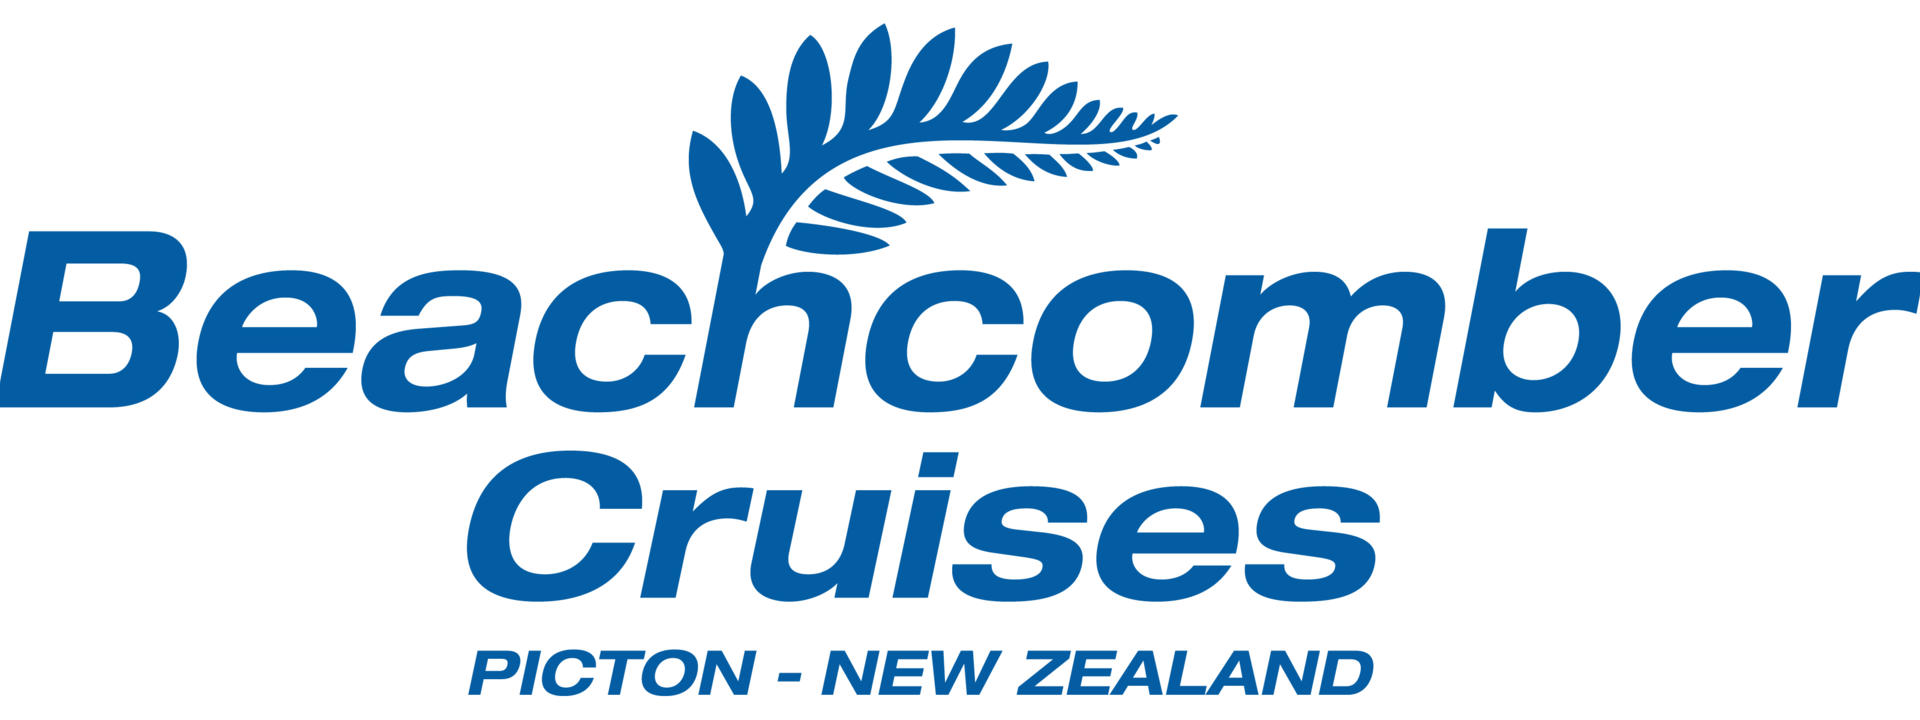 beachcomber-cruises-picton-logo-blue-on-white.jpg